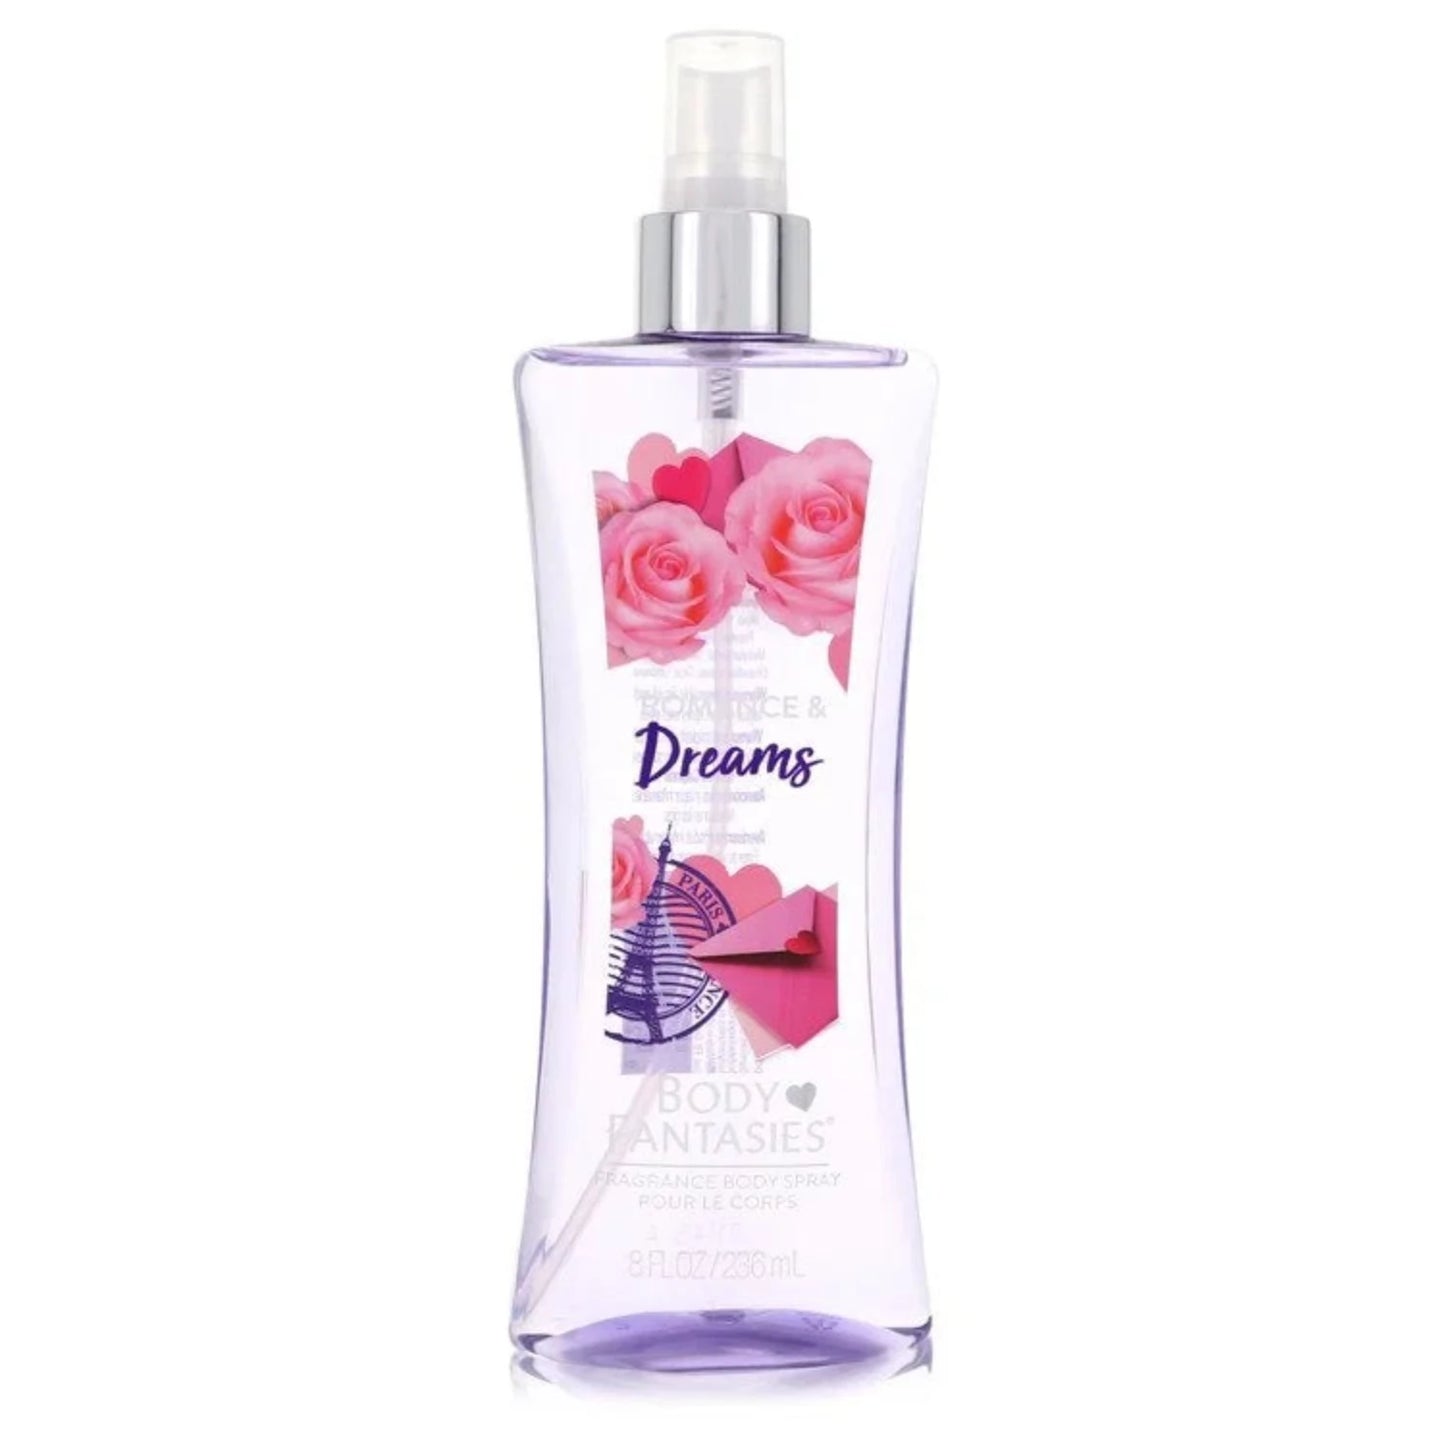 Body Fantasies Signature Romance & Dreams Body Spray By Parfums De Coeur for women